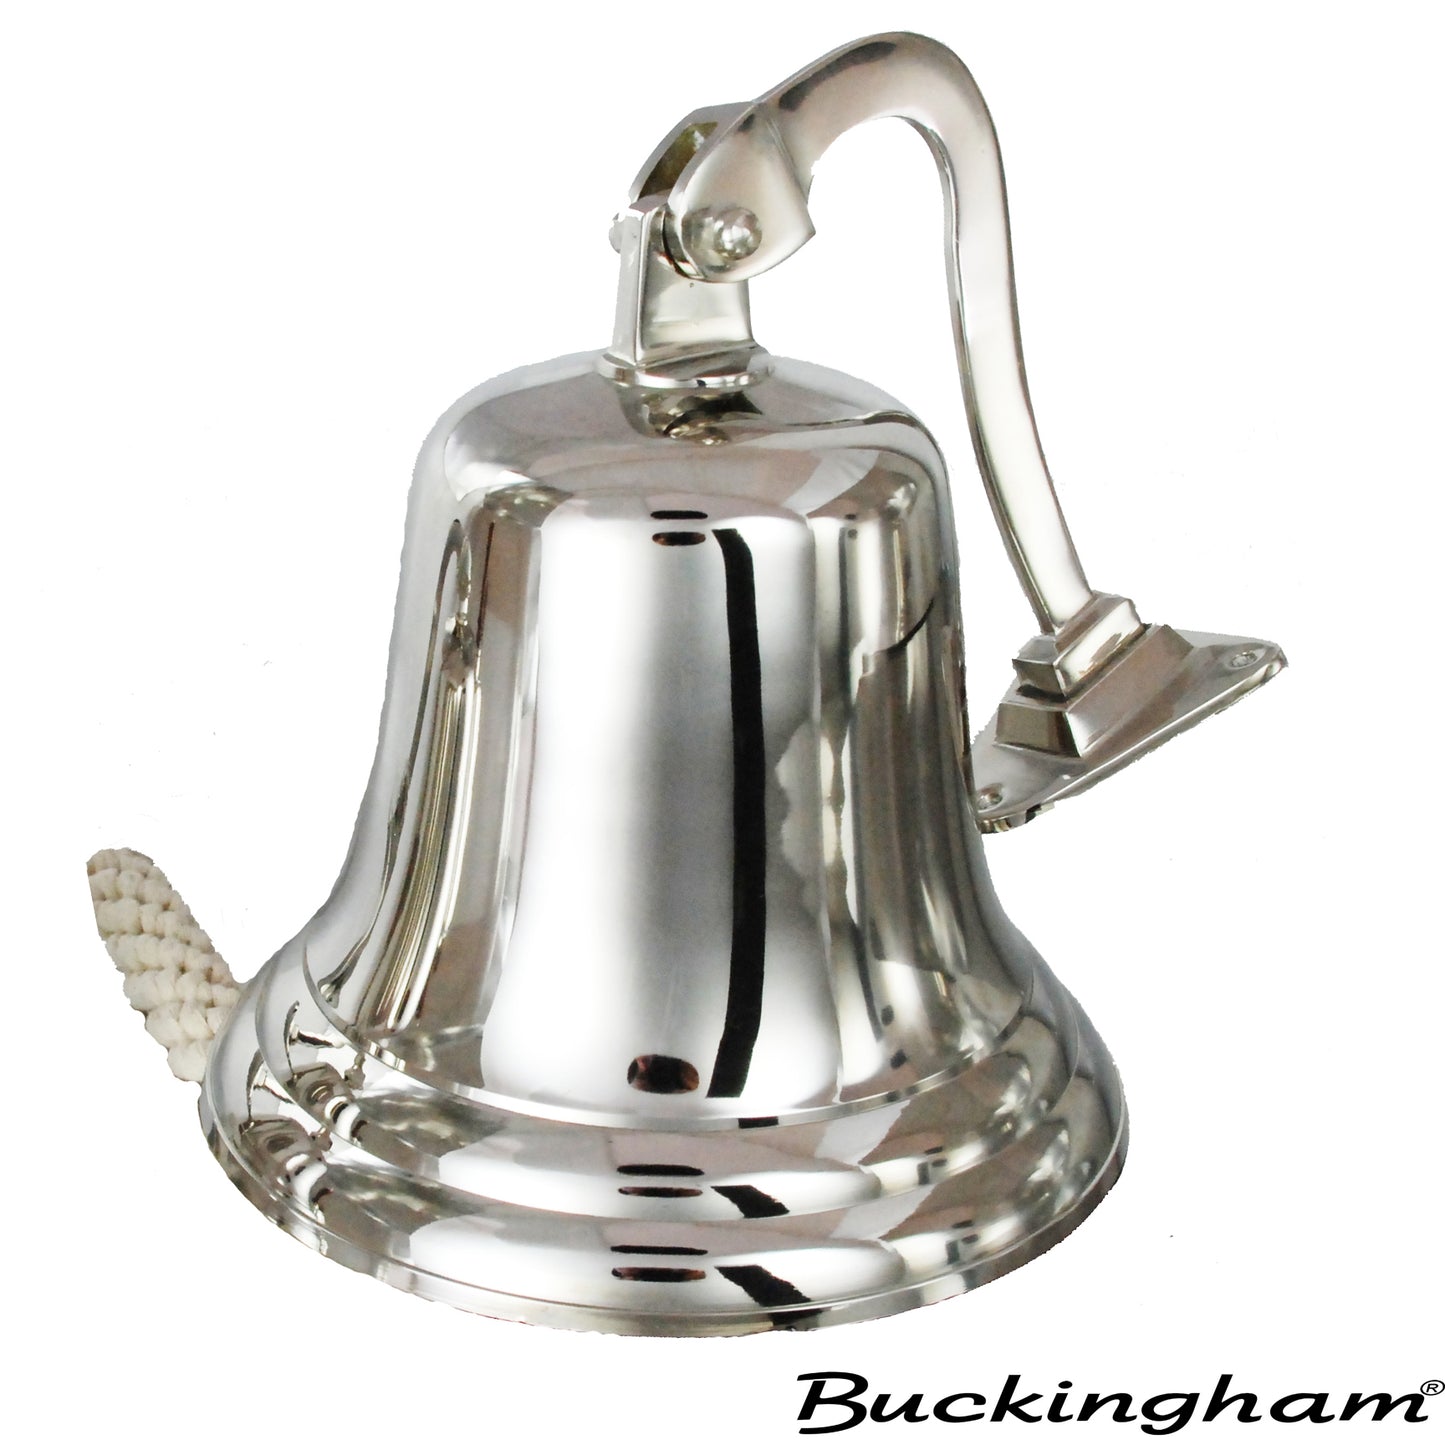 Buckingham Solid Bras Titanic 1912 Ship Bell, Last Orders Bell, Pub Bell, Door Bell, Wall Mountable Bell. 8"/ 20 cm